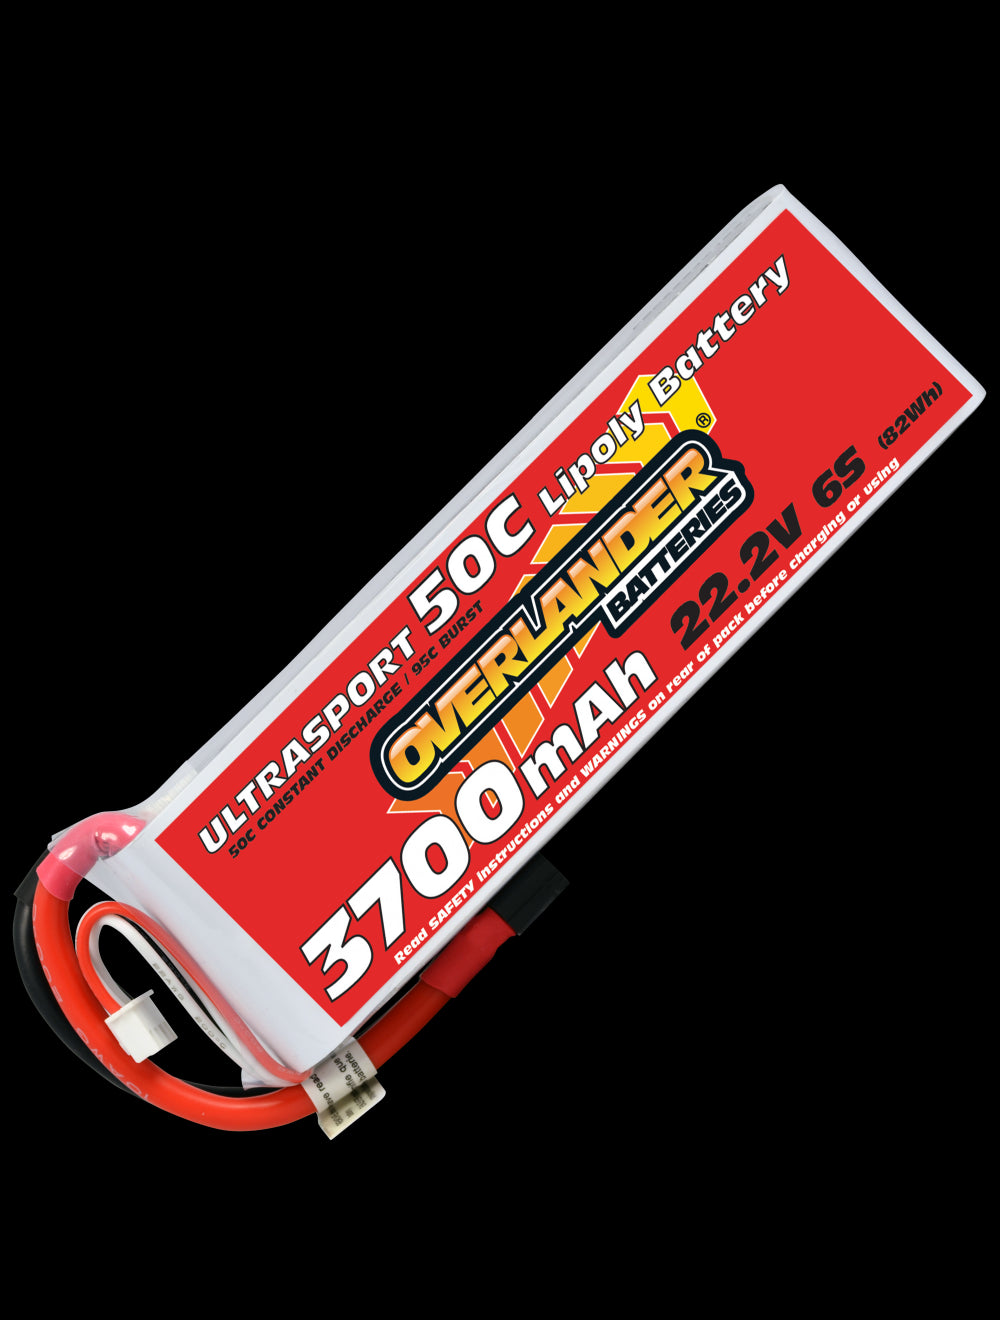 Overlander 3700mAh 22.2V 6S 50C Ultrasport LiPo Battery - Deans Connectors 3226